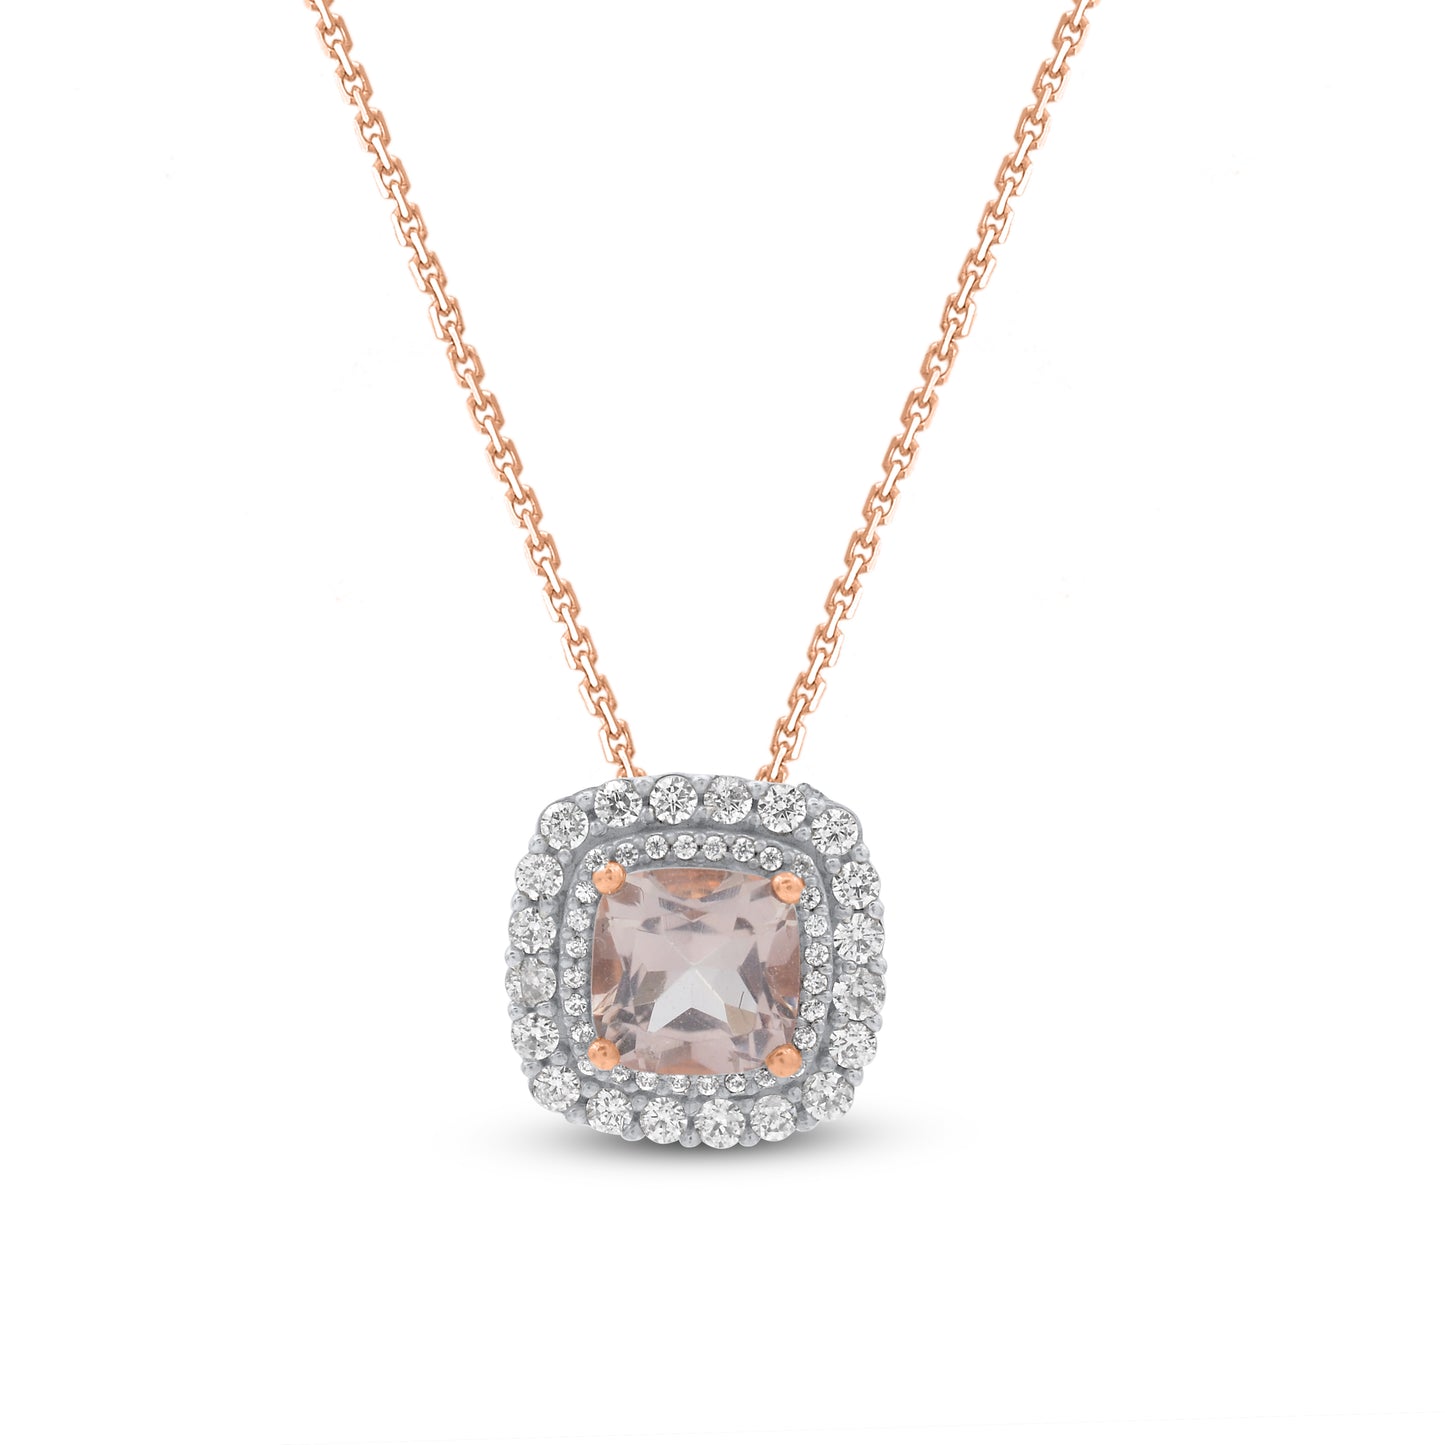 Morganite Cushion Cut Fashion Pendant Necklace in 10K Rose Gold (J-K Color, I3-I4 Clarity)